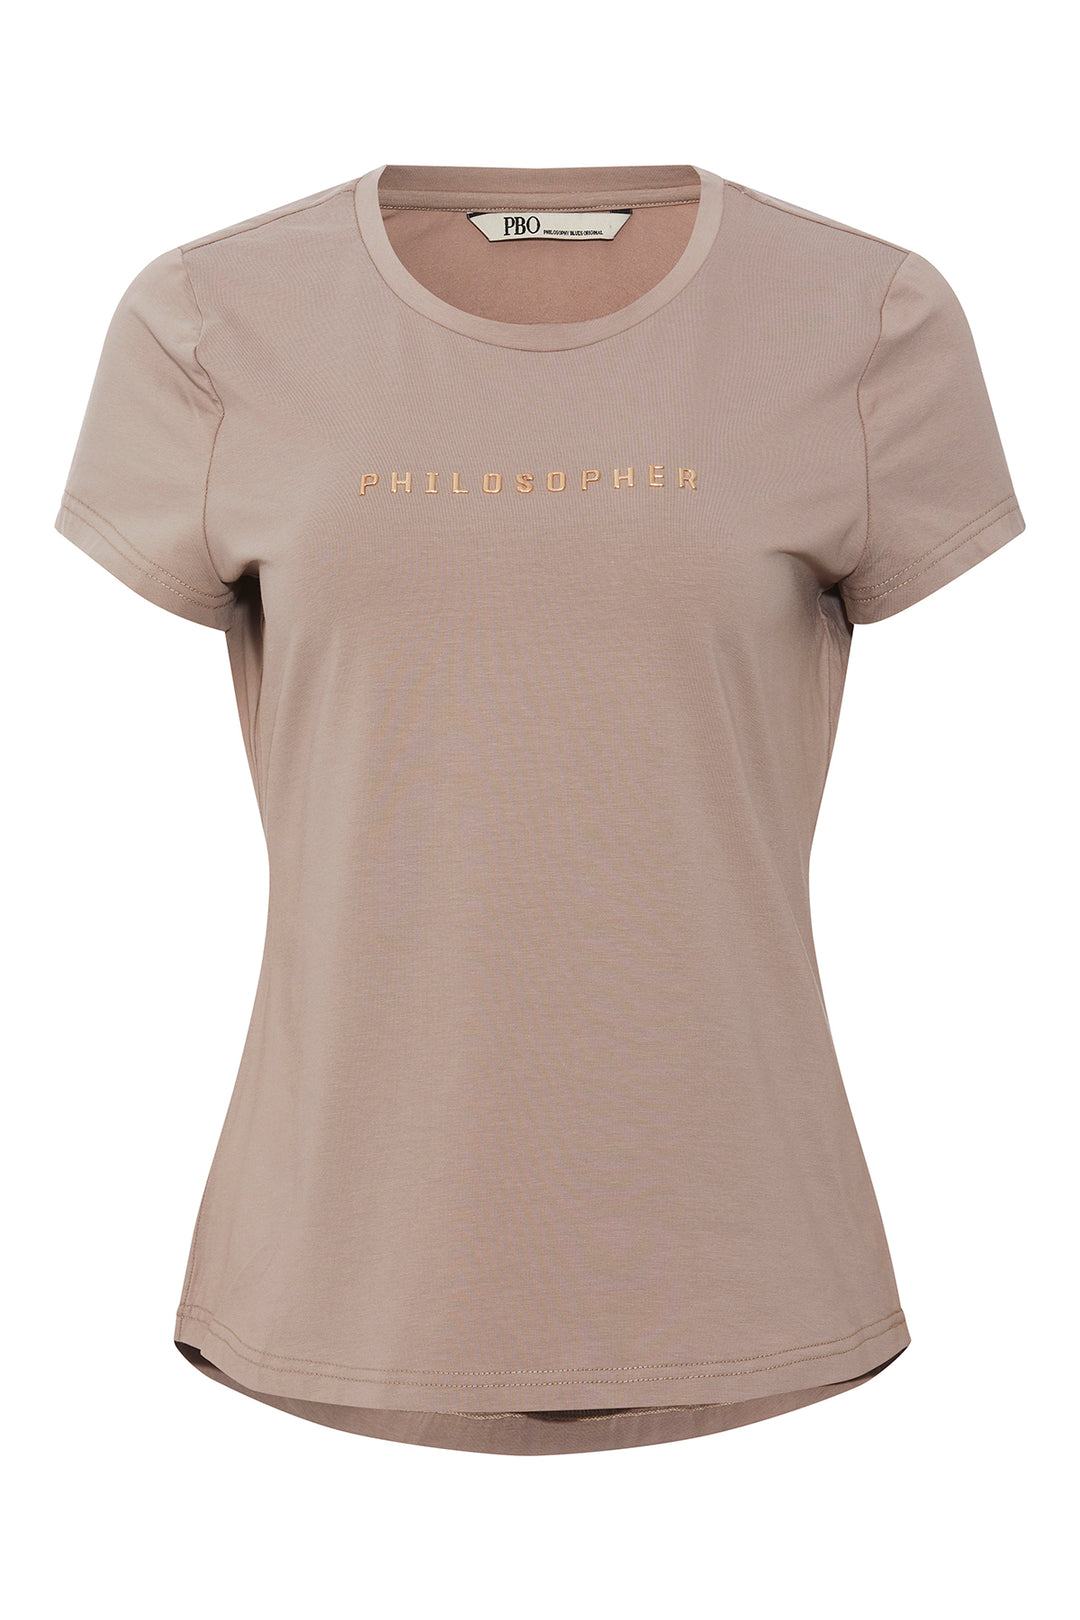 PBO Philosopher T-shirt T-SHIRTS 408 Elm